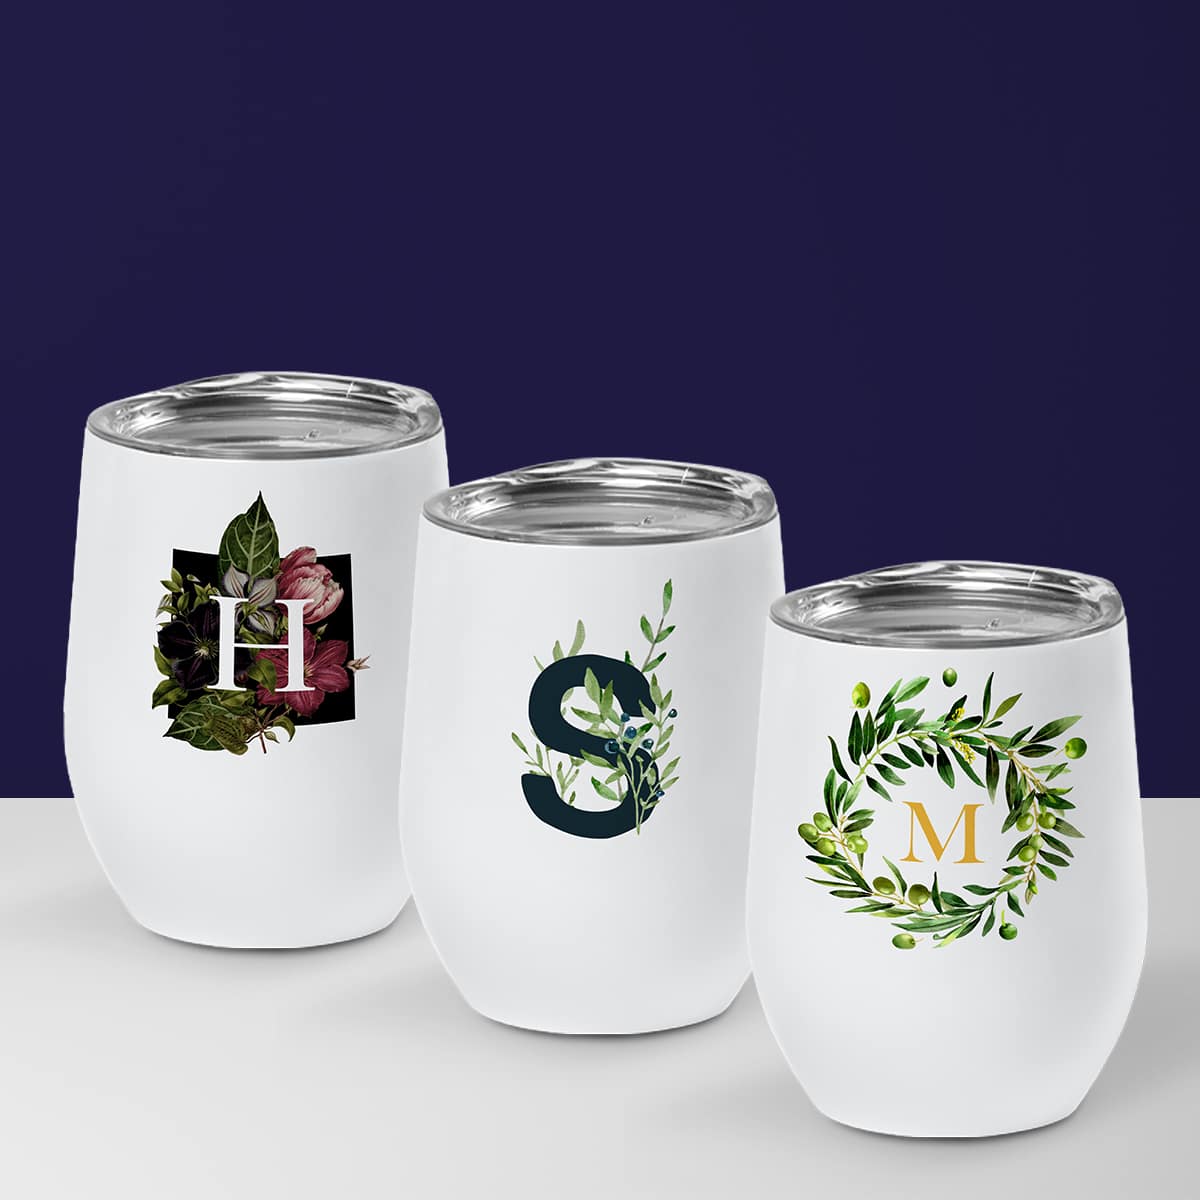 Three wine cups with monogram designs